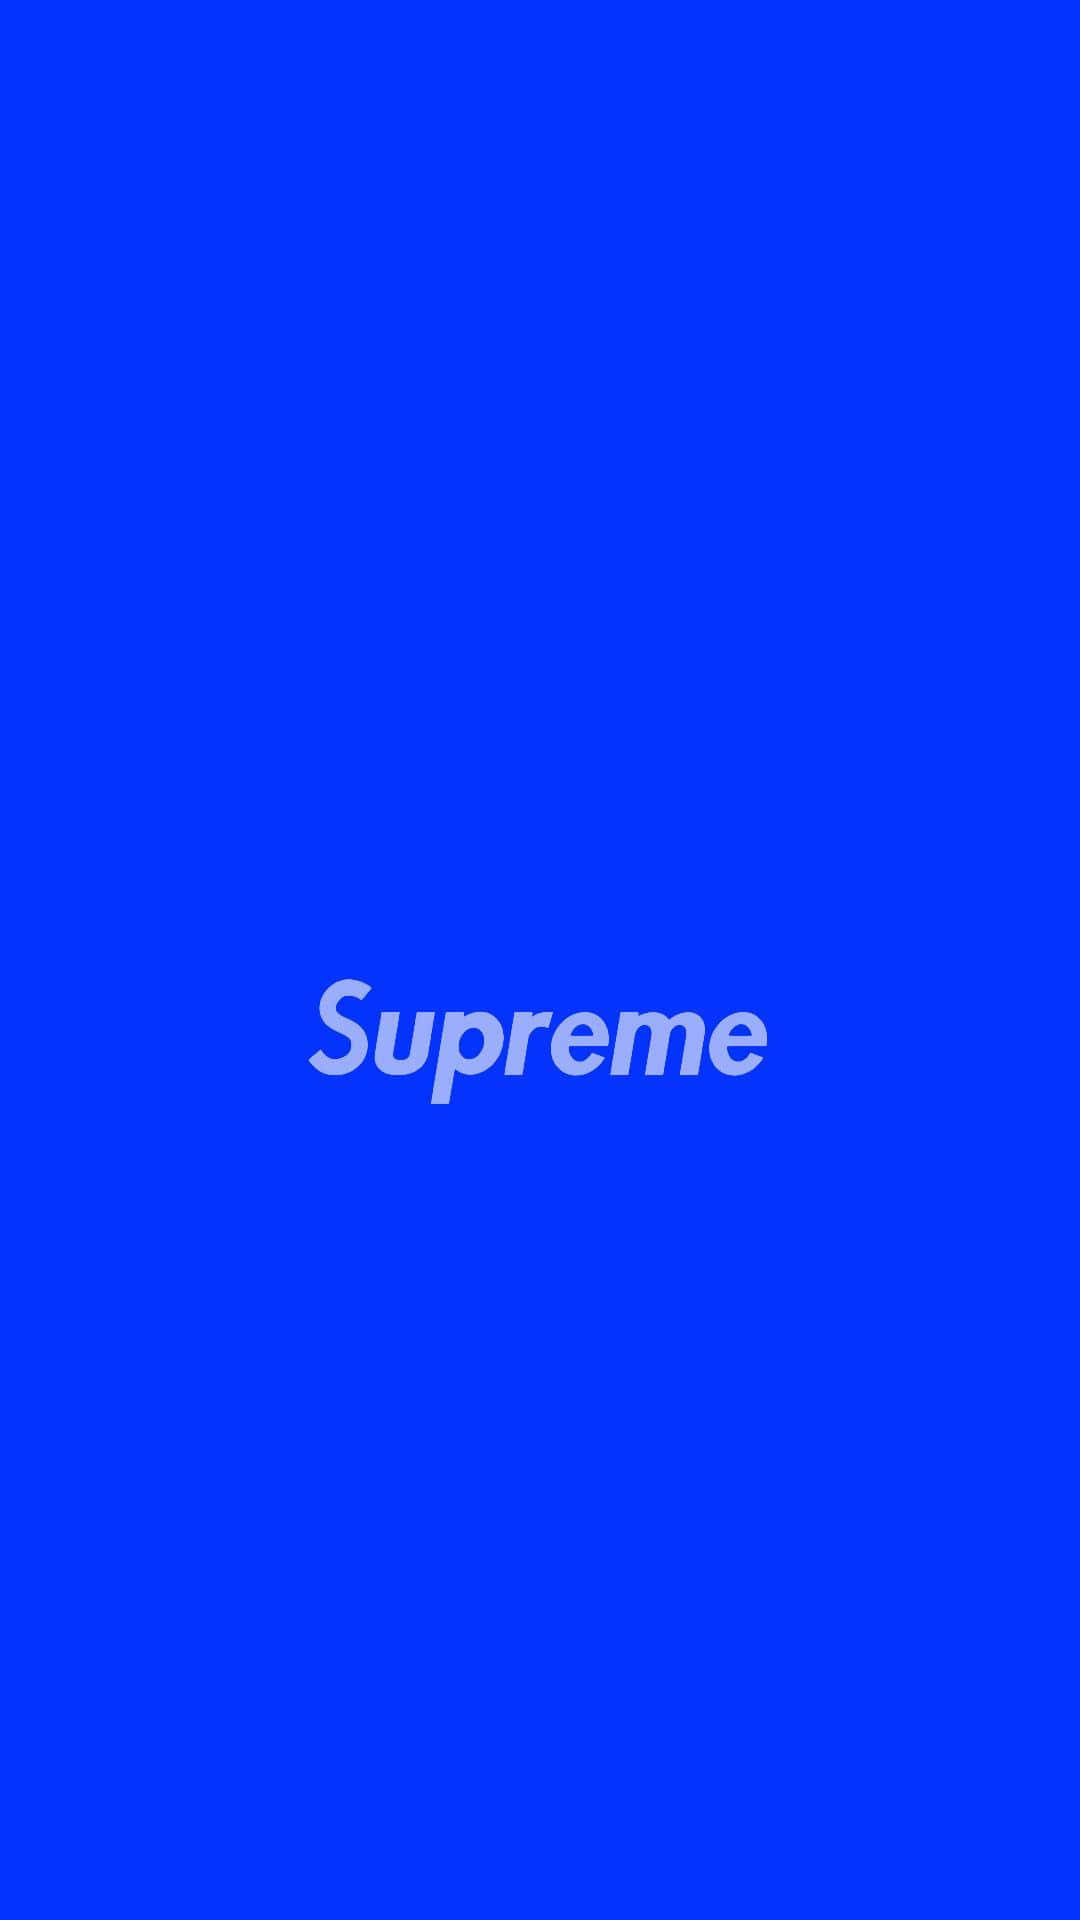 Download Supreme Logo On A Blue Background Wallpaper | Wallpapers.com